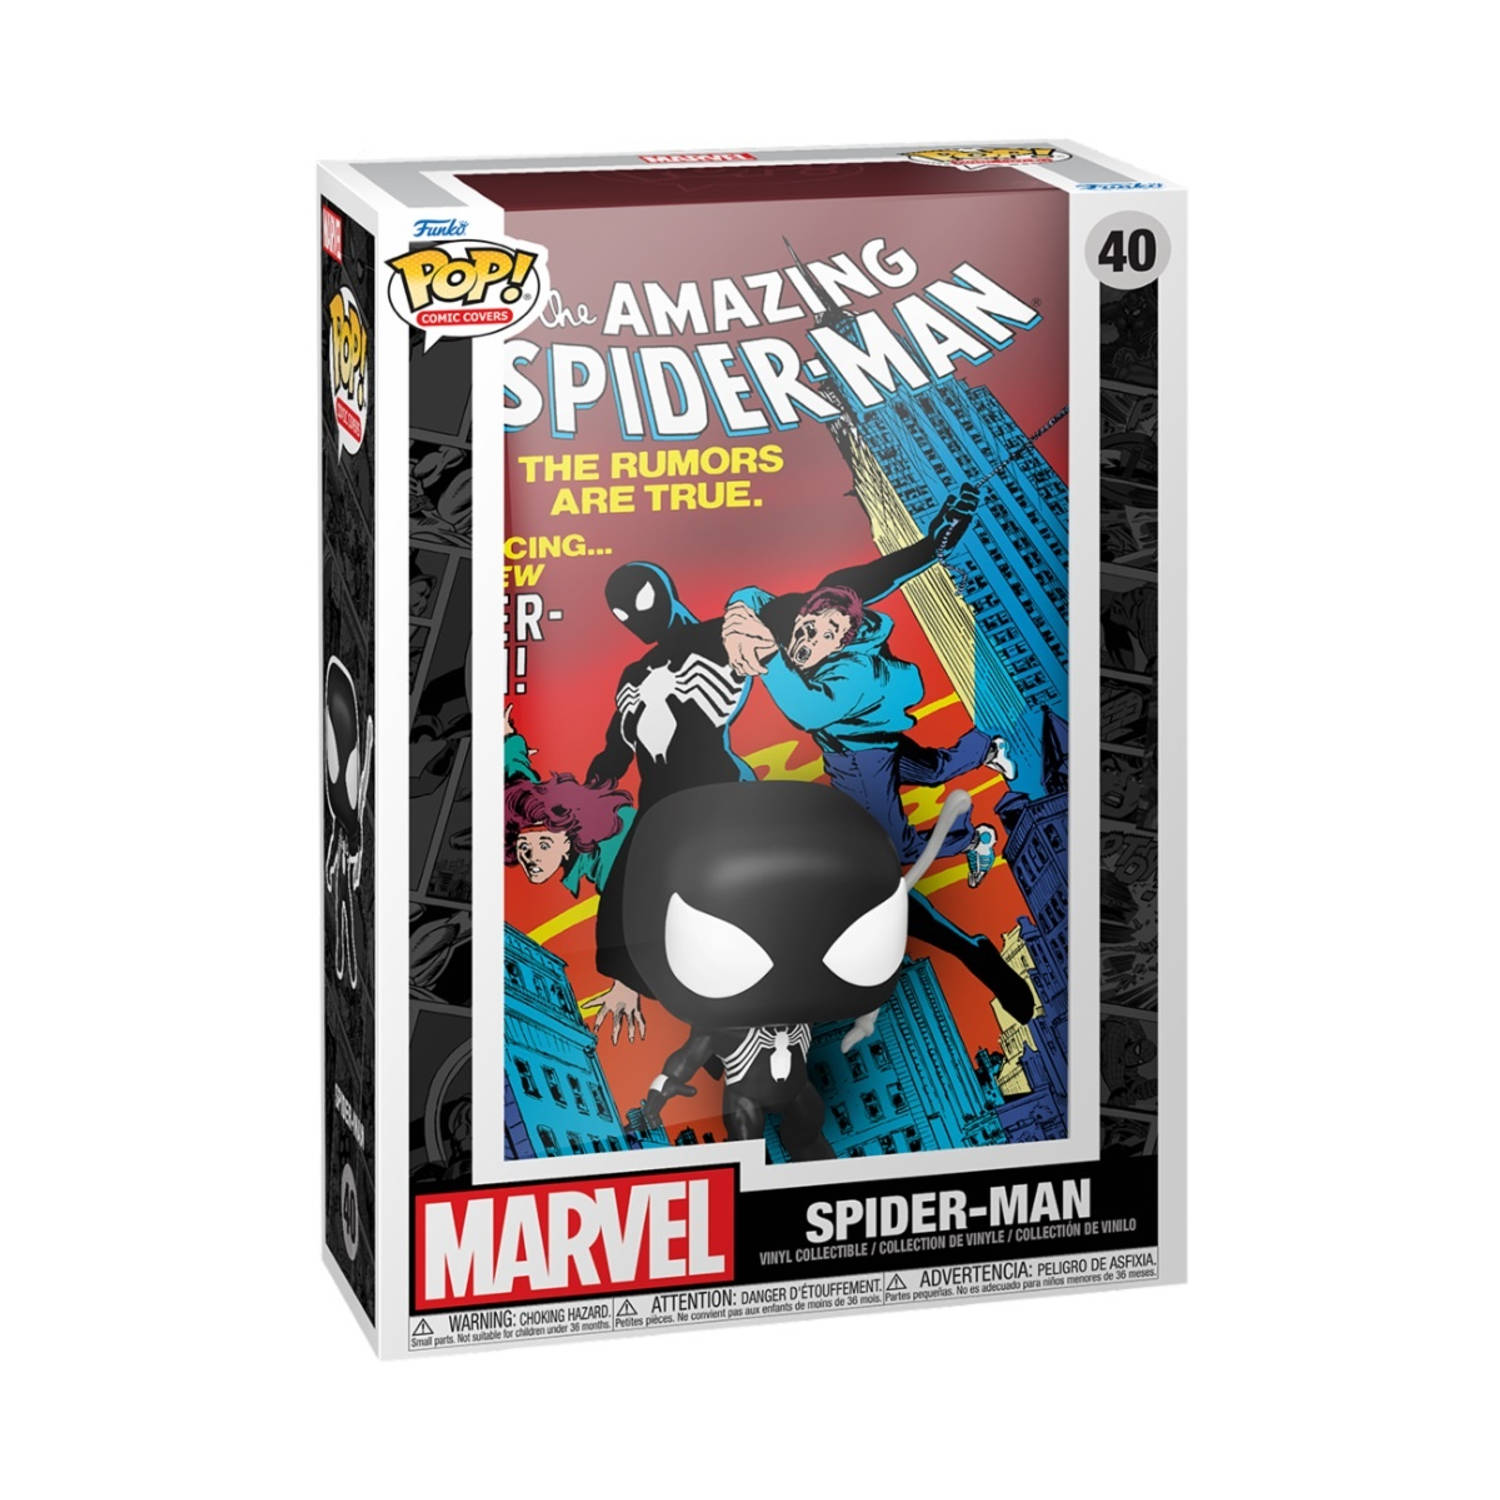 Pop Comic Cover: Marvel Amazing Spider-Man #252 Funko Pop #40